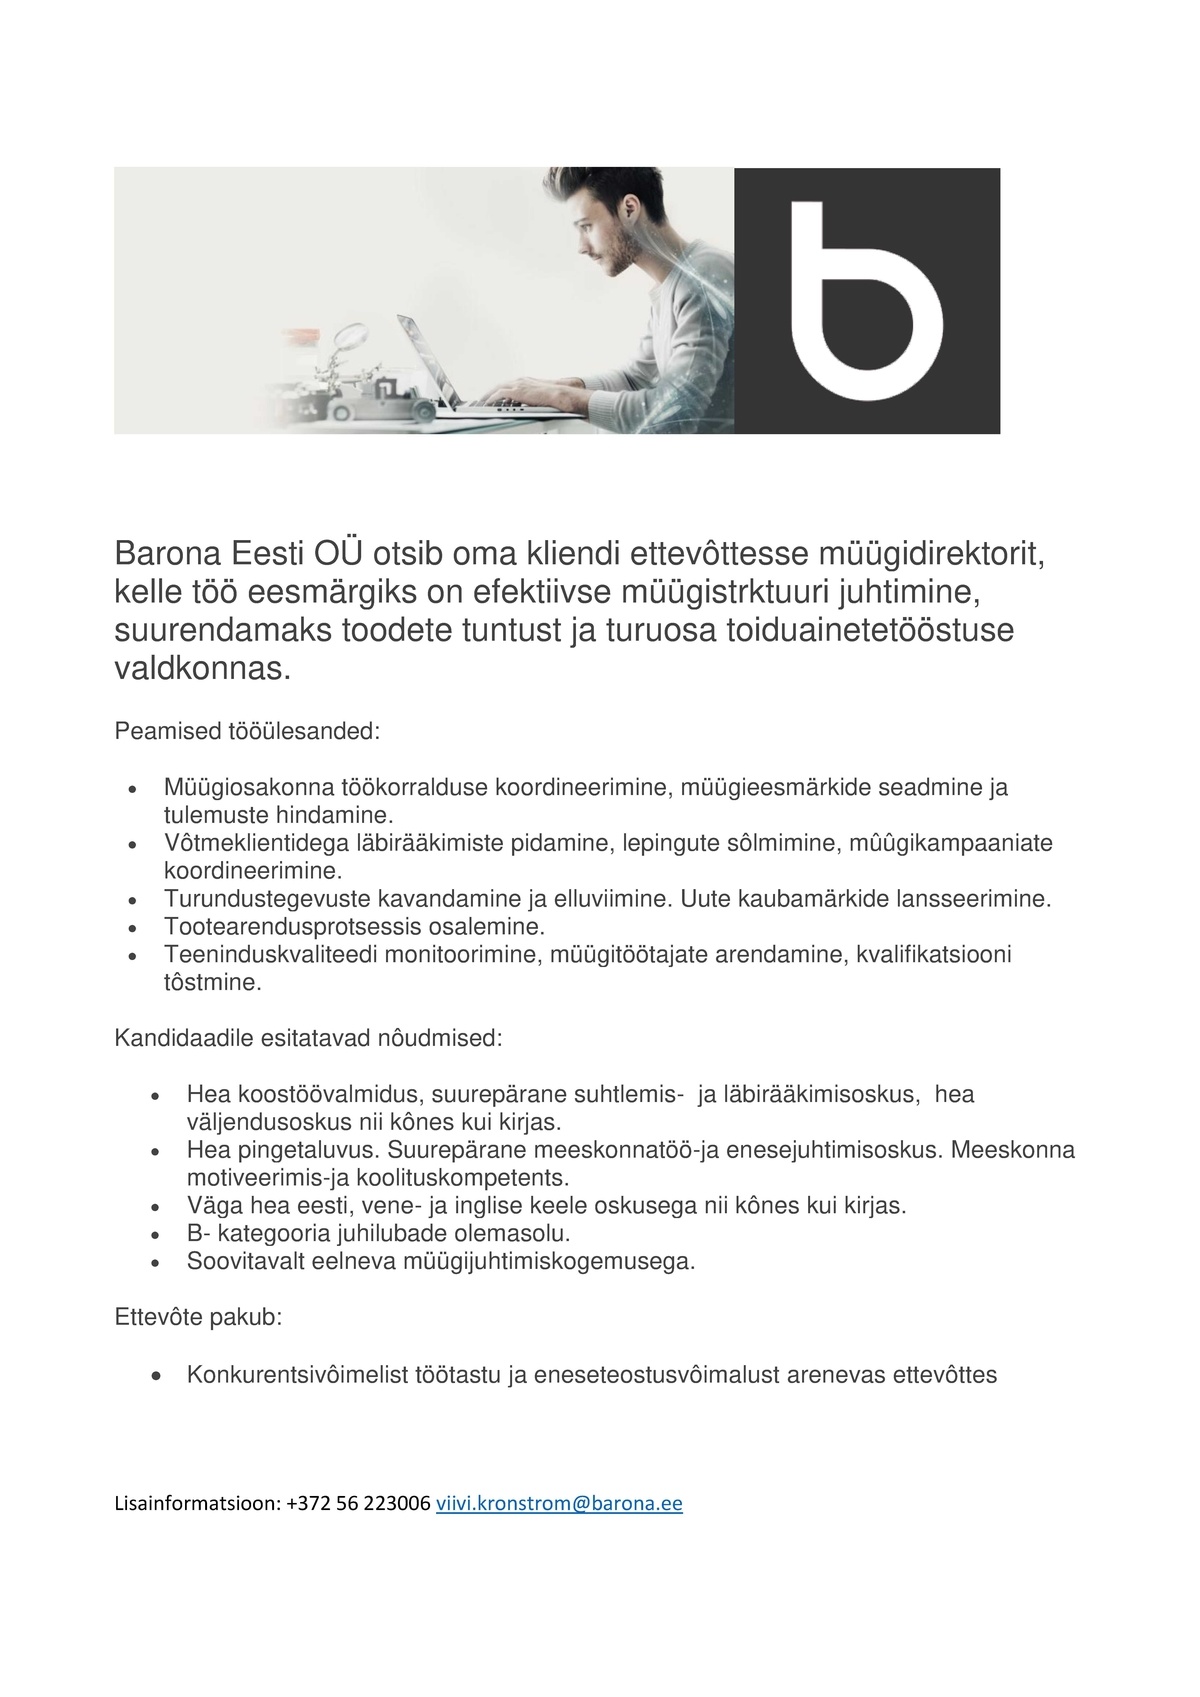 Barona Eesti OÜ Müügidirektor